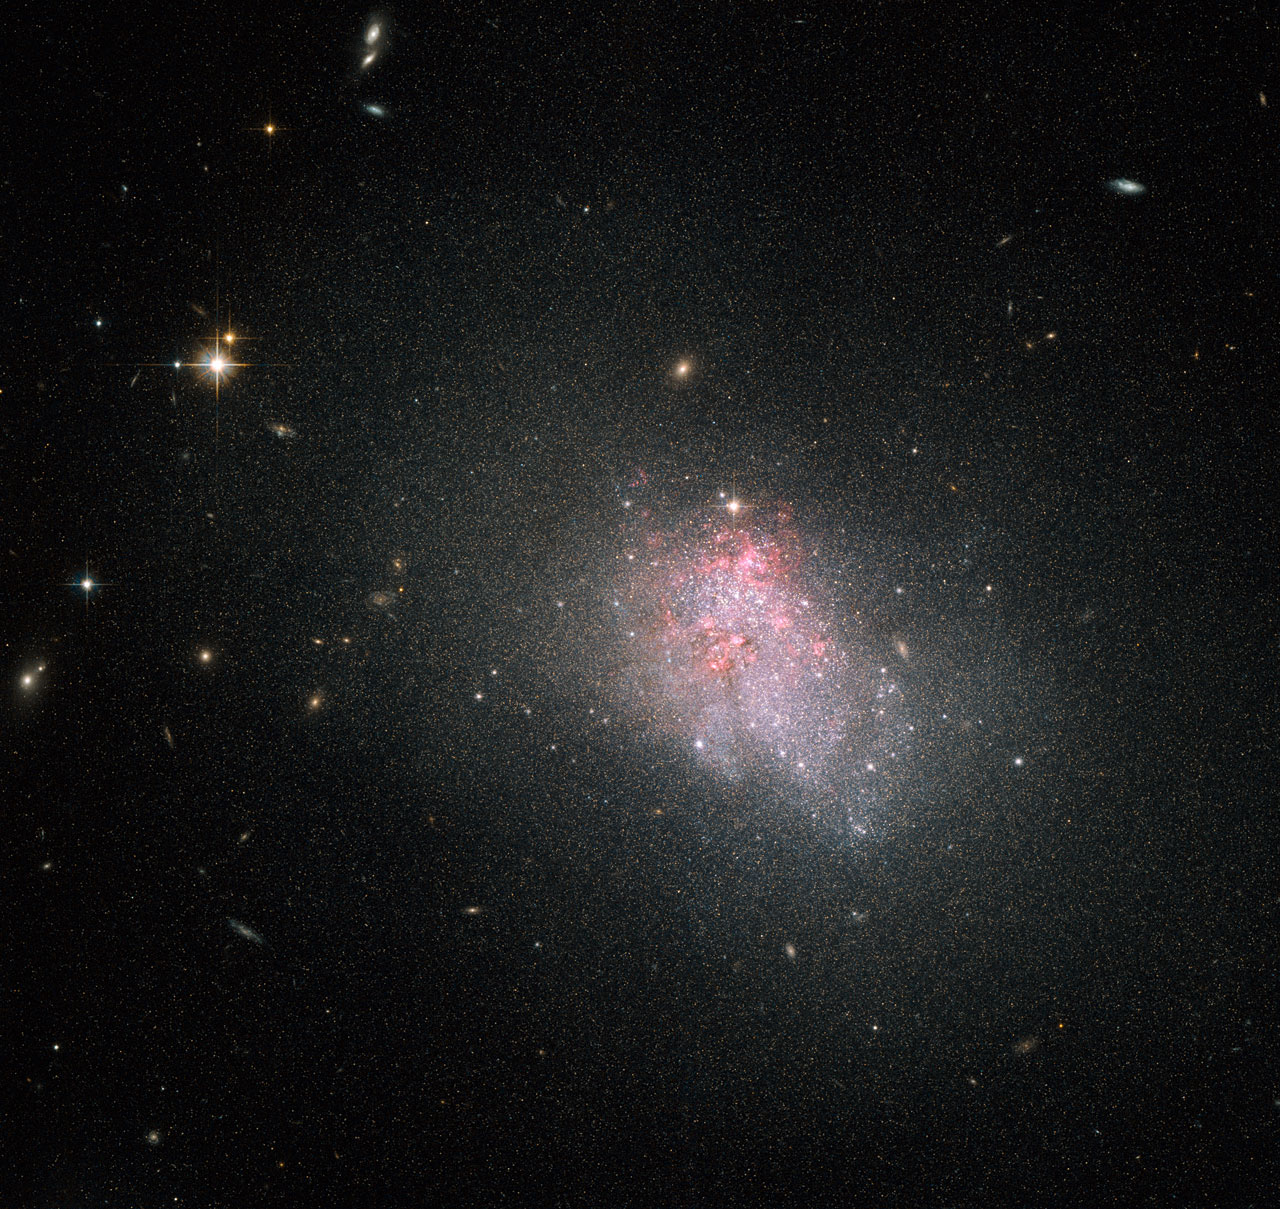 Hubble Views a Starburst Galaxy Hard at Work